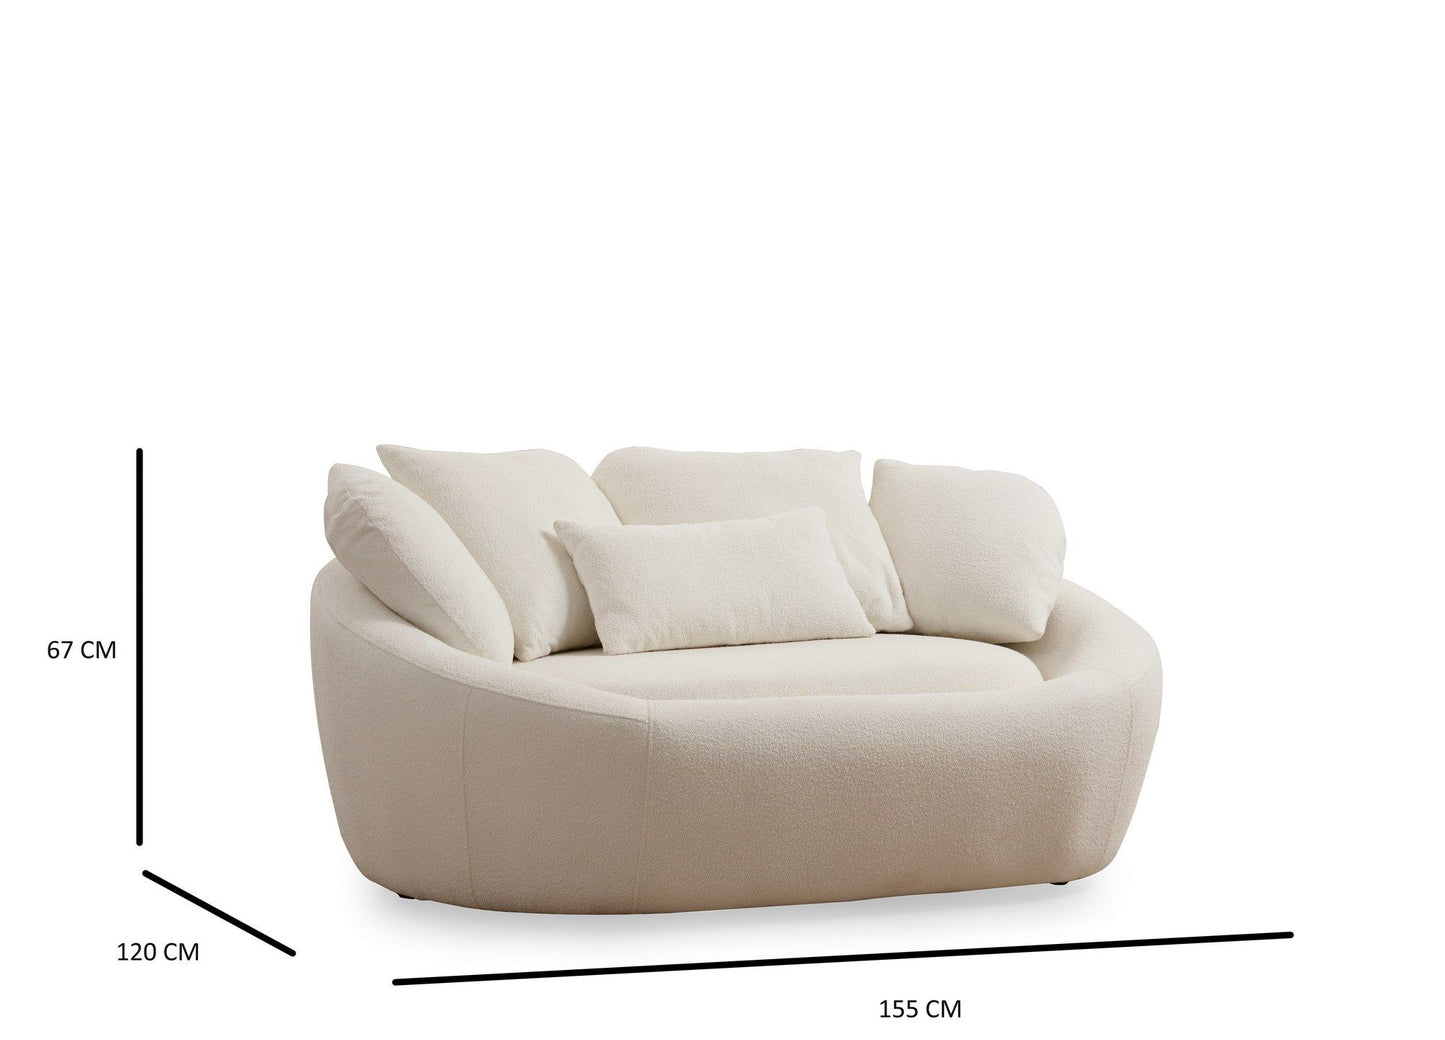 Midye - Love Seat - 2-Person Sofa